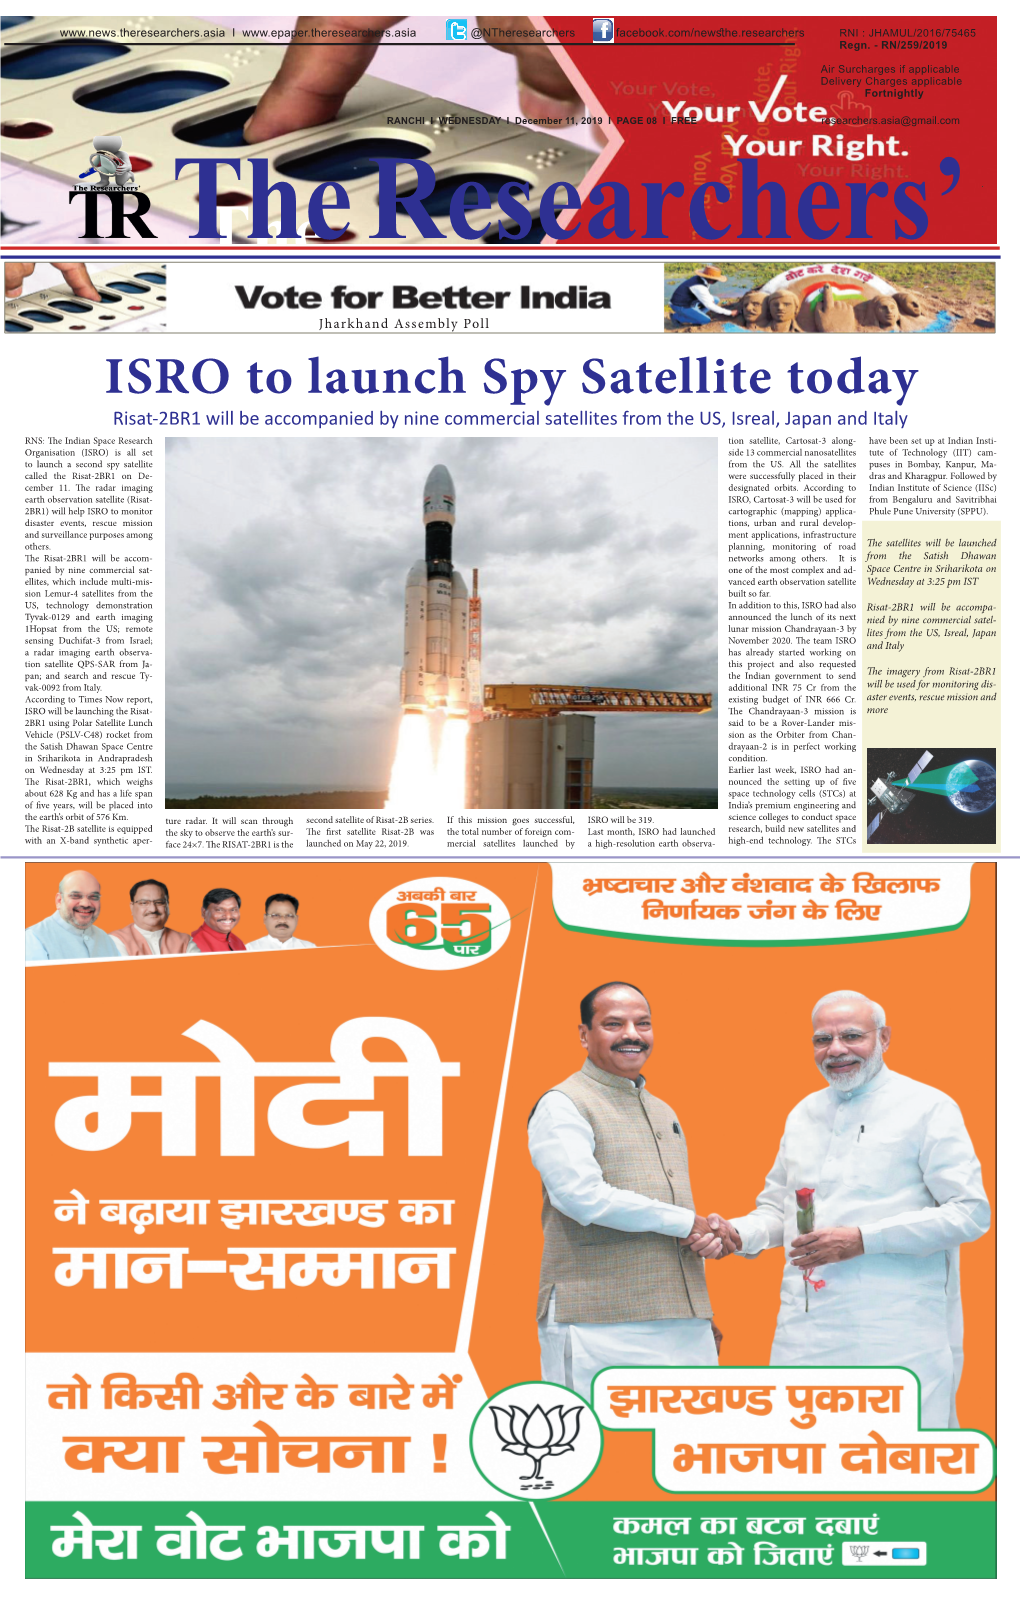 ISRO to Launch Spy Satellite Today